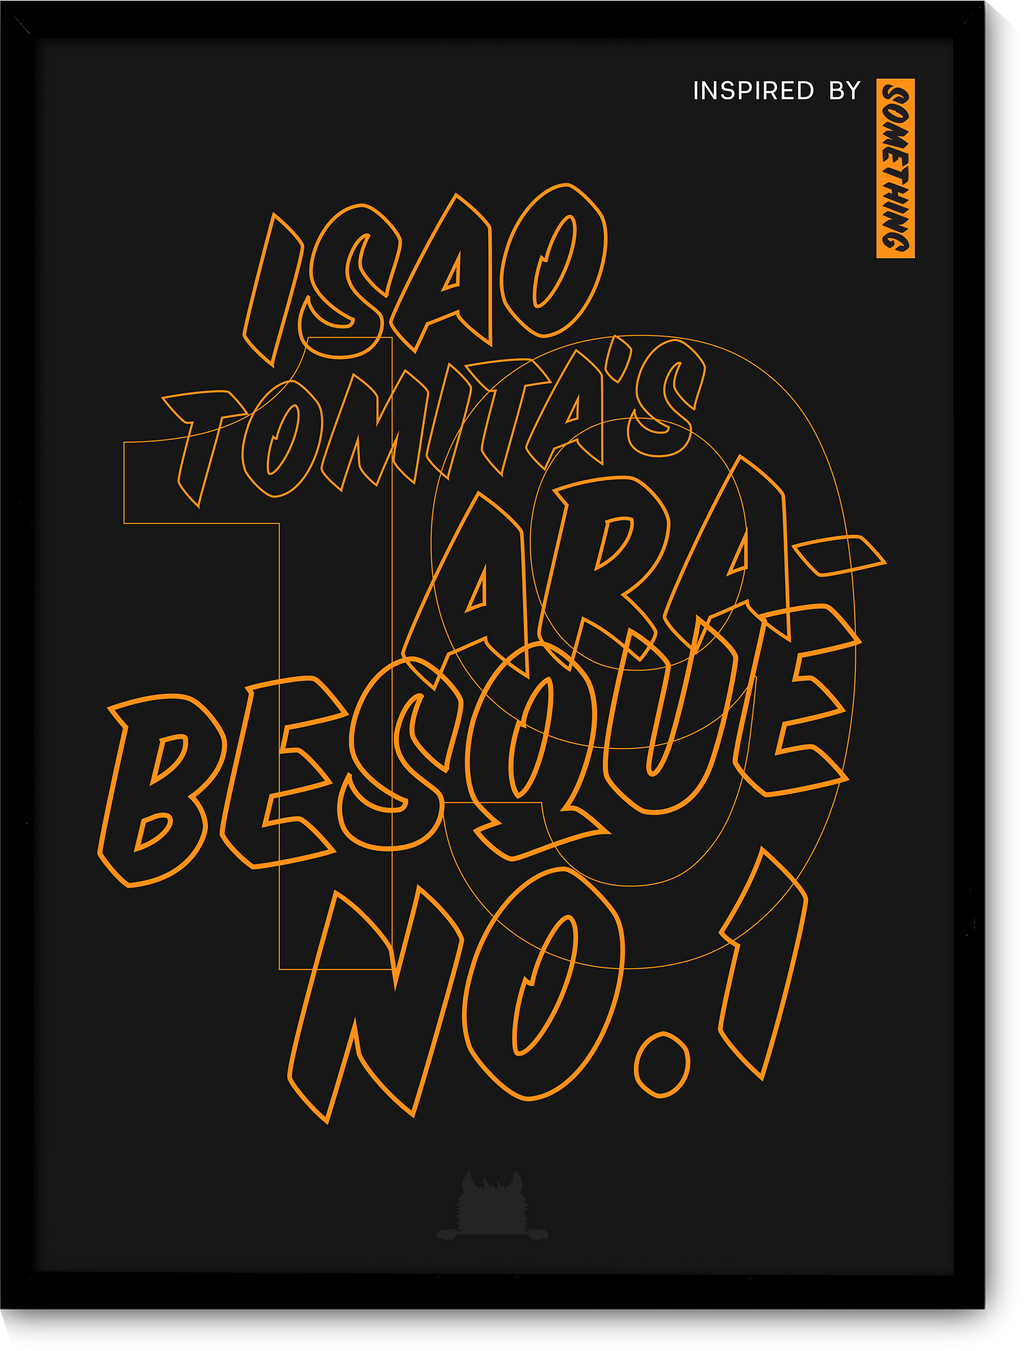 #19 Inspired by Isao Tomita’s Arabesque No. 1.